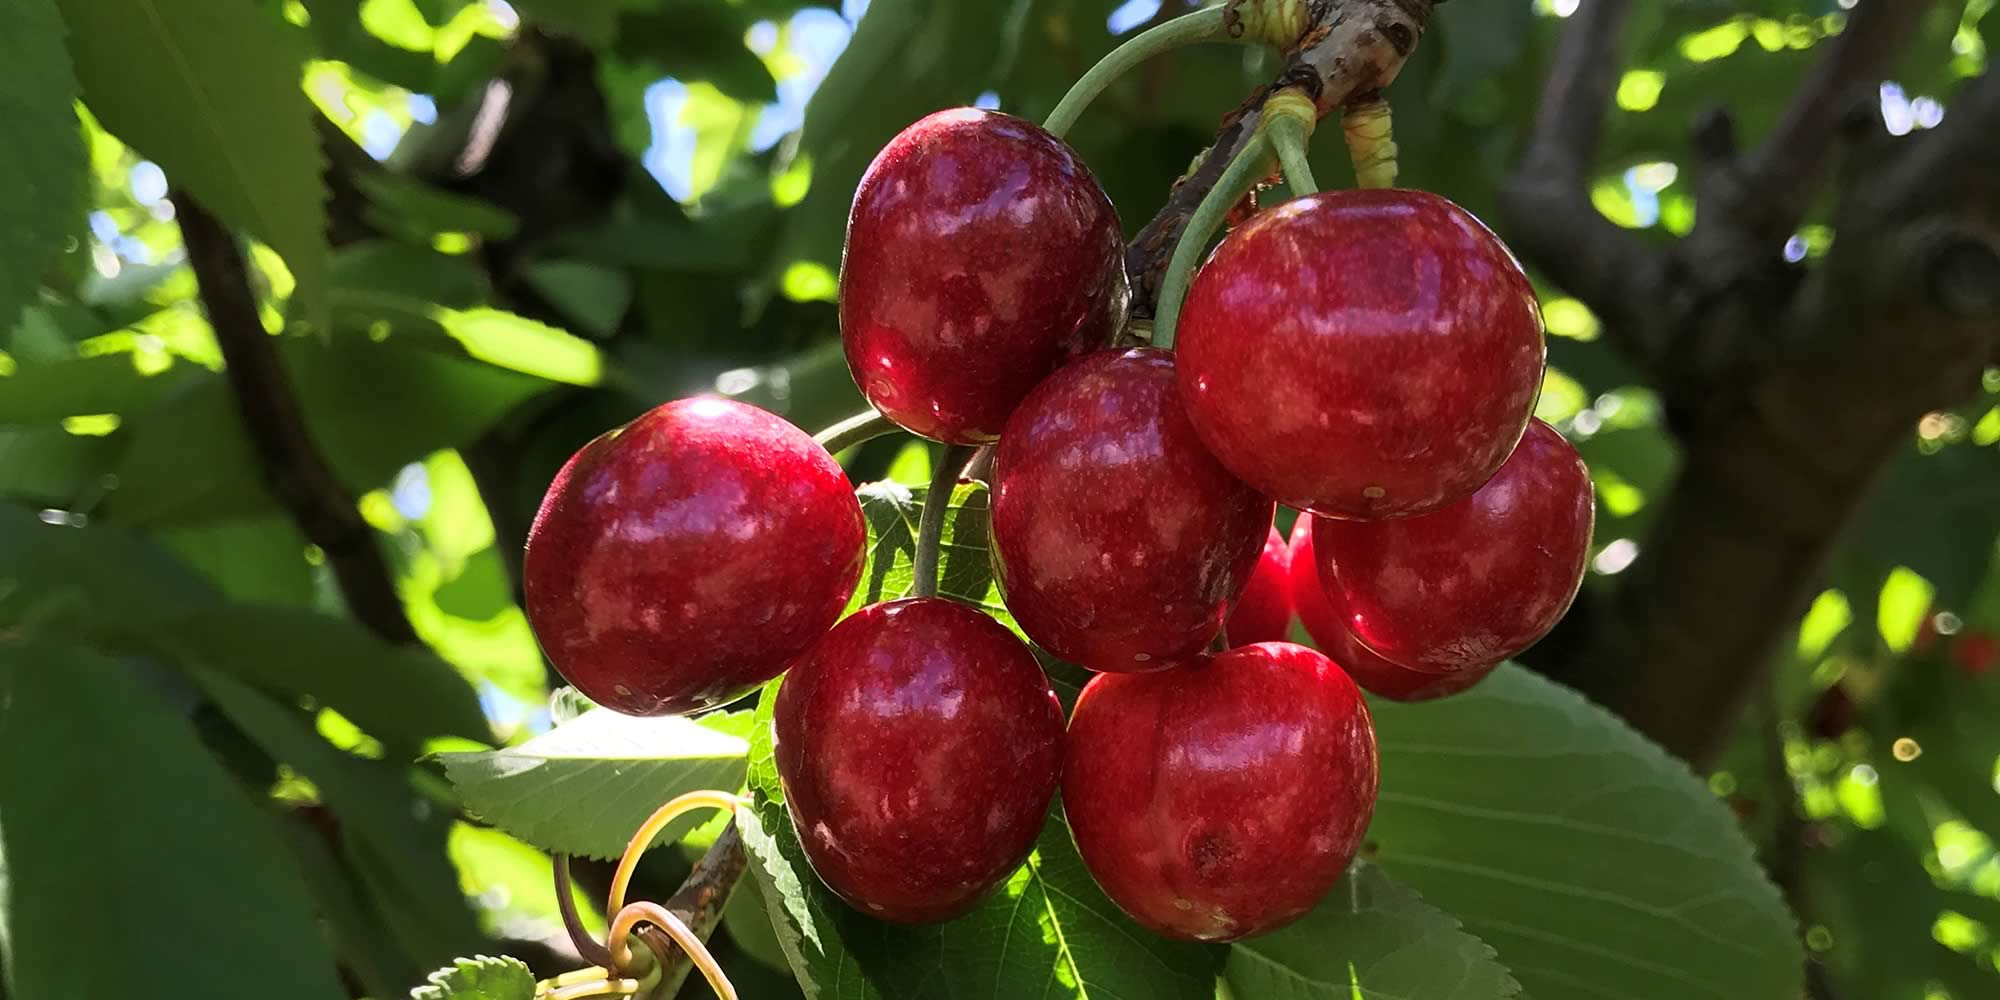 Slide - Cherries on tree